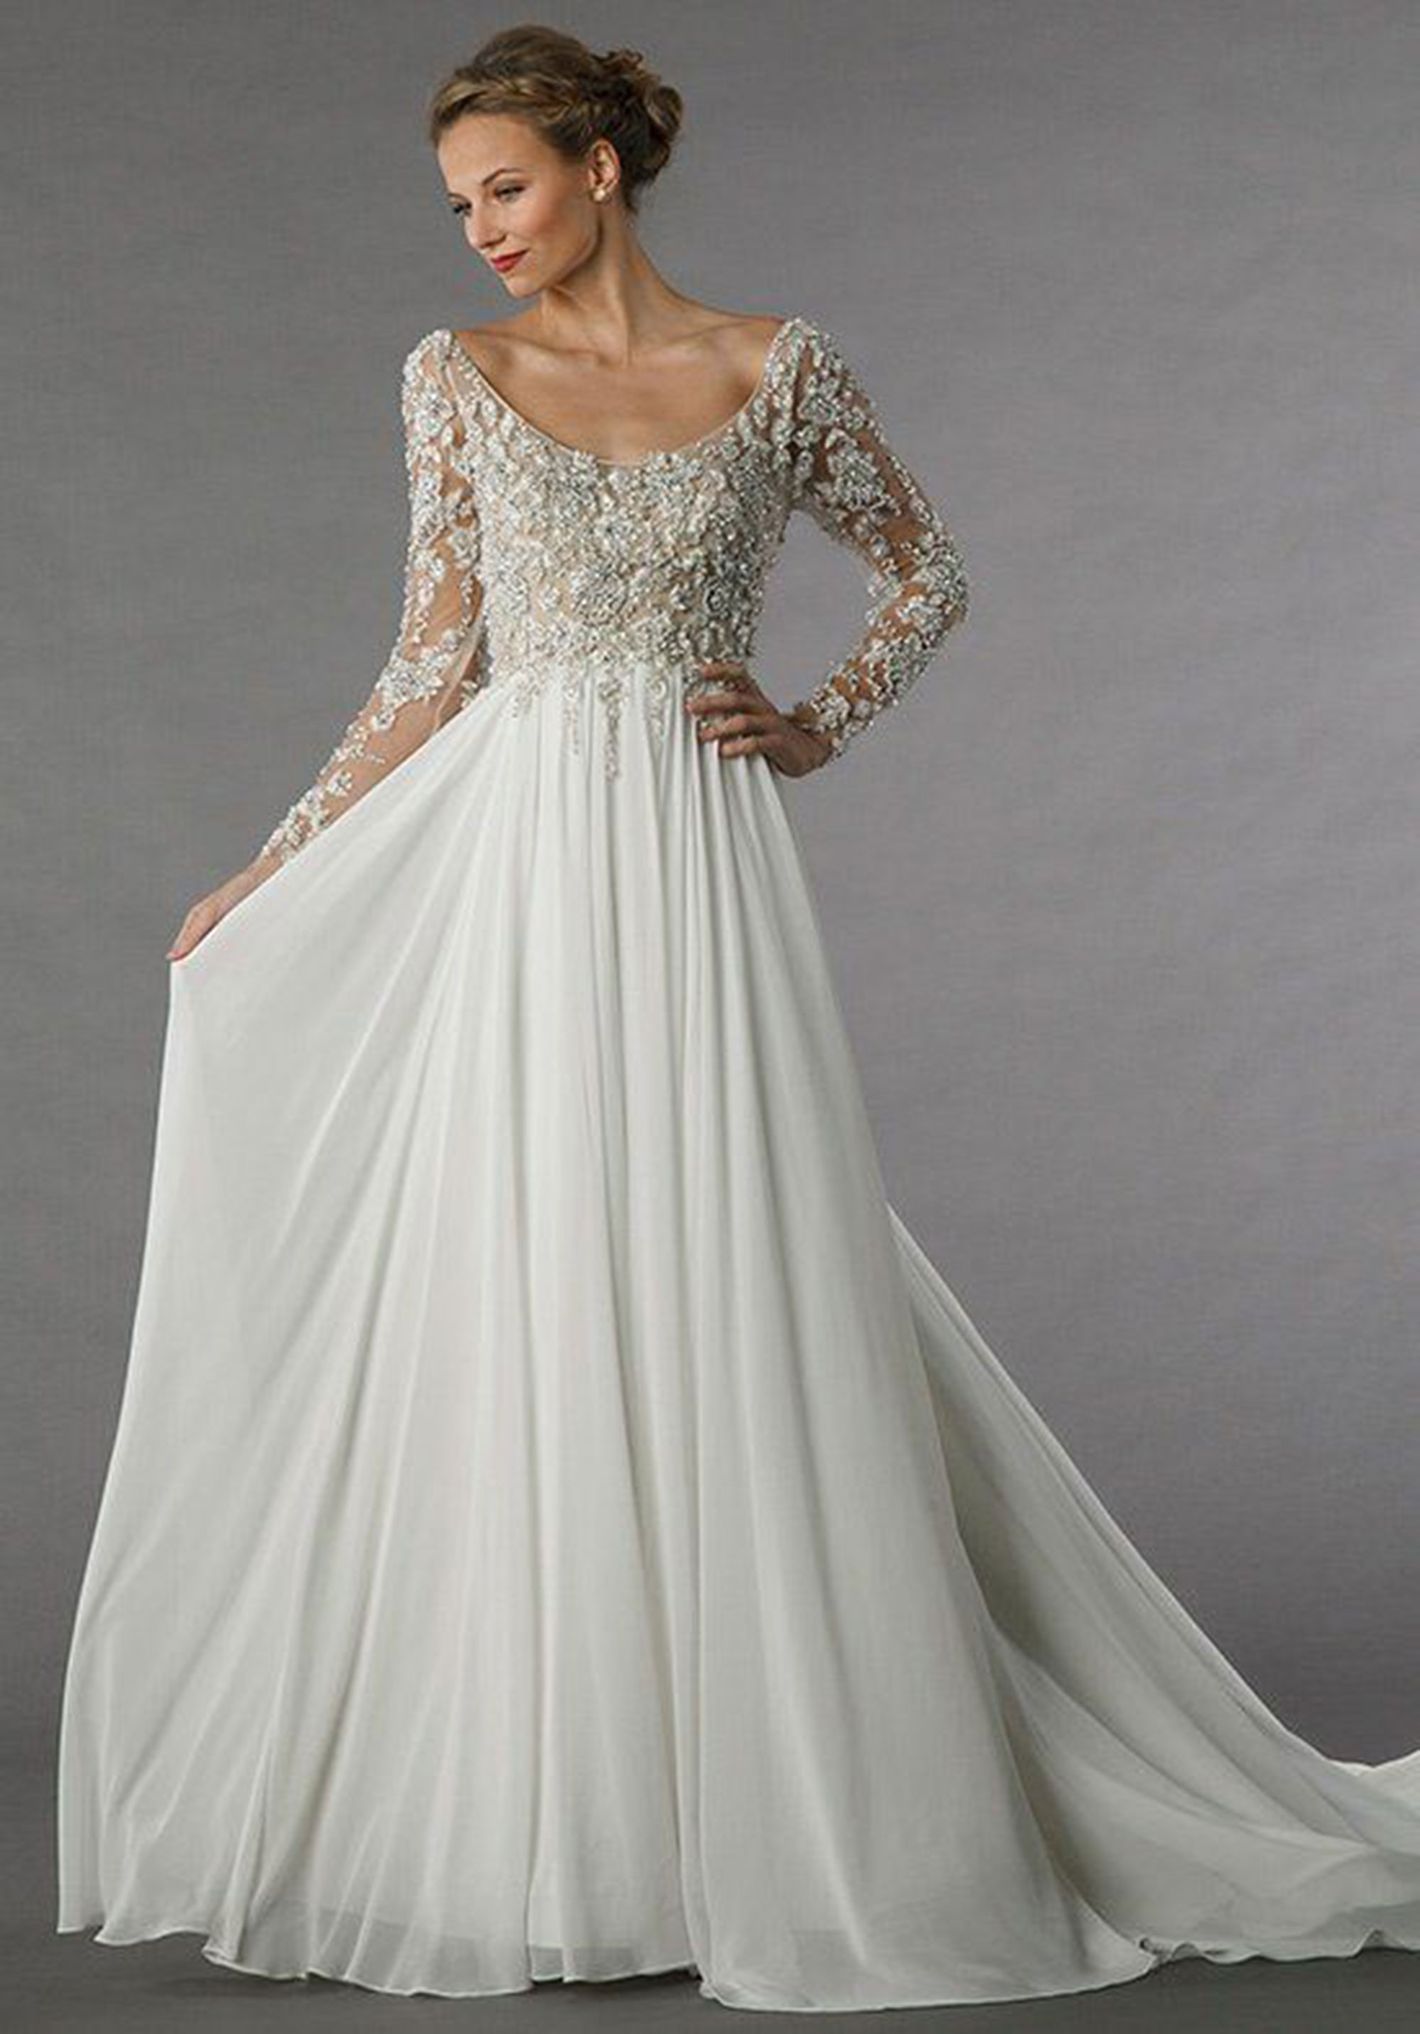 23 Elegant Long Sleeve Wedding Dresses For Winter Weddings 8763